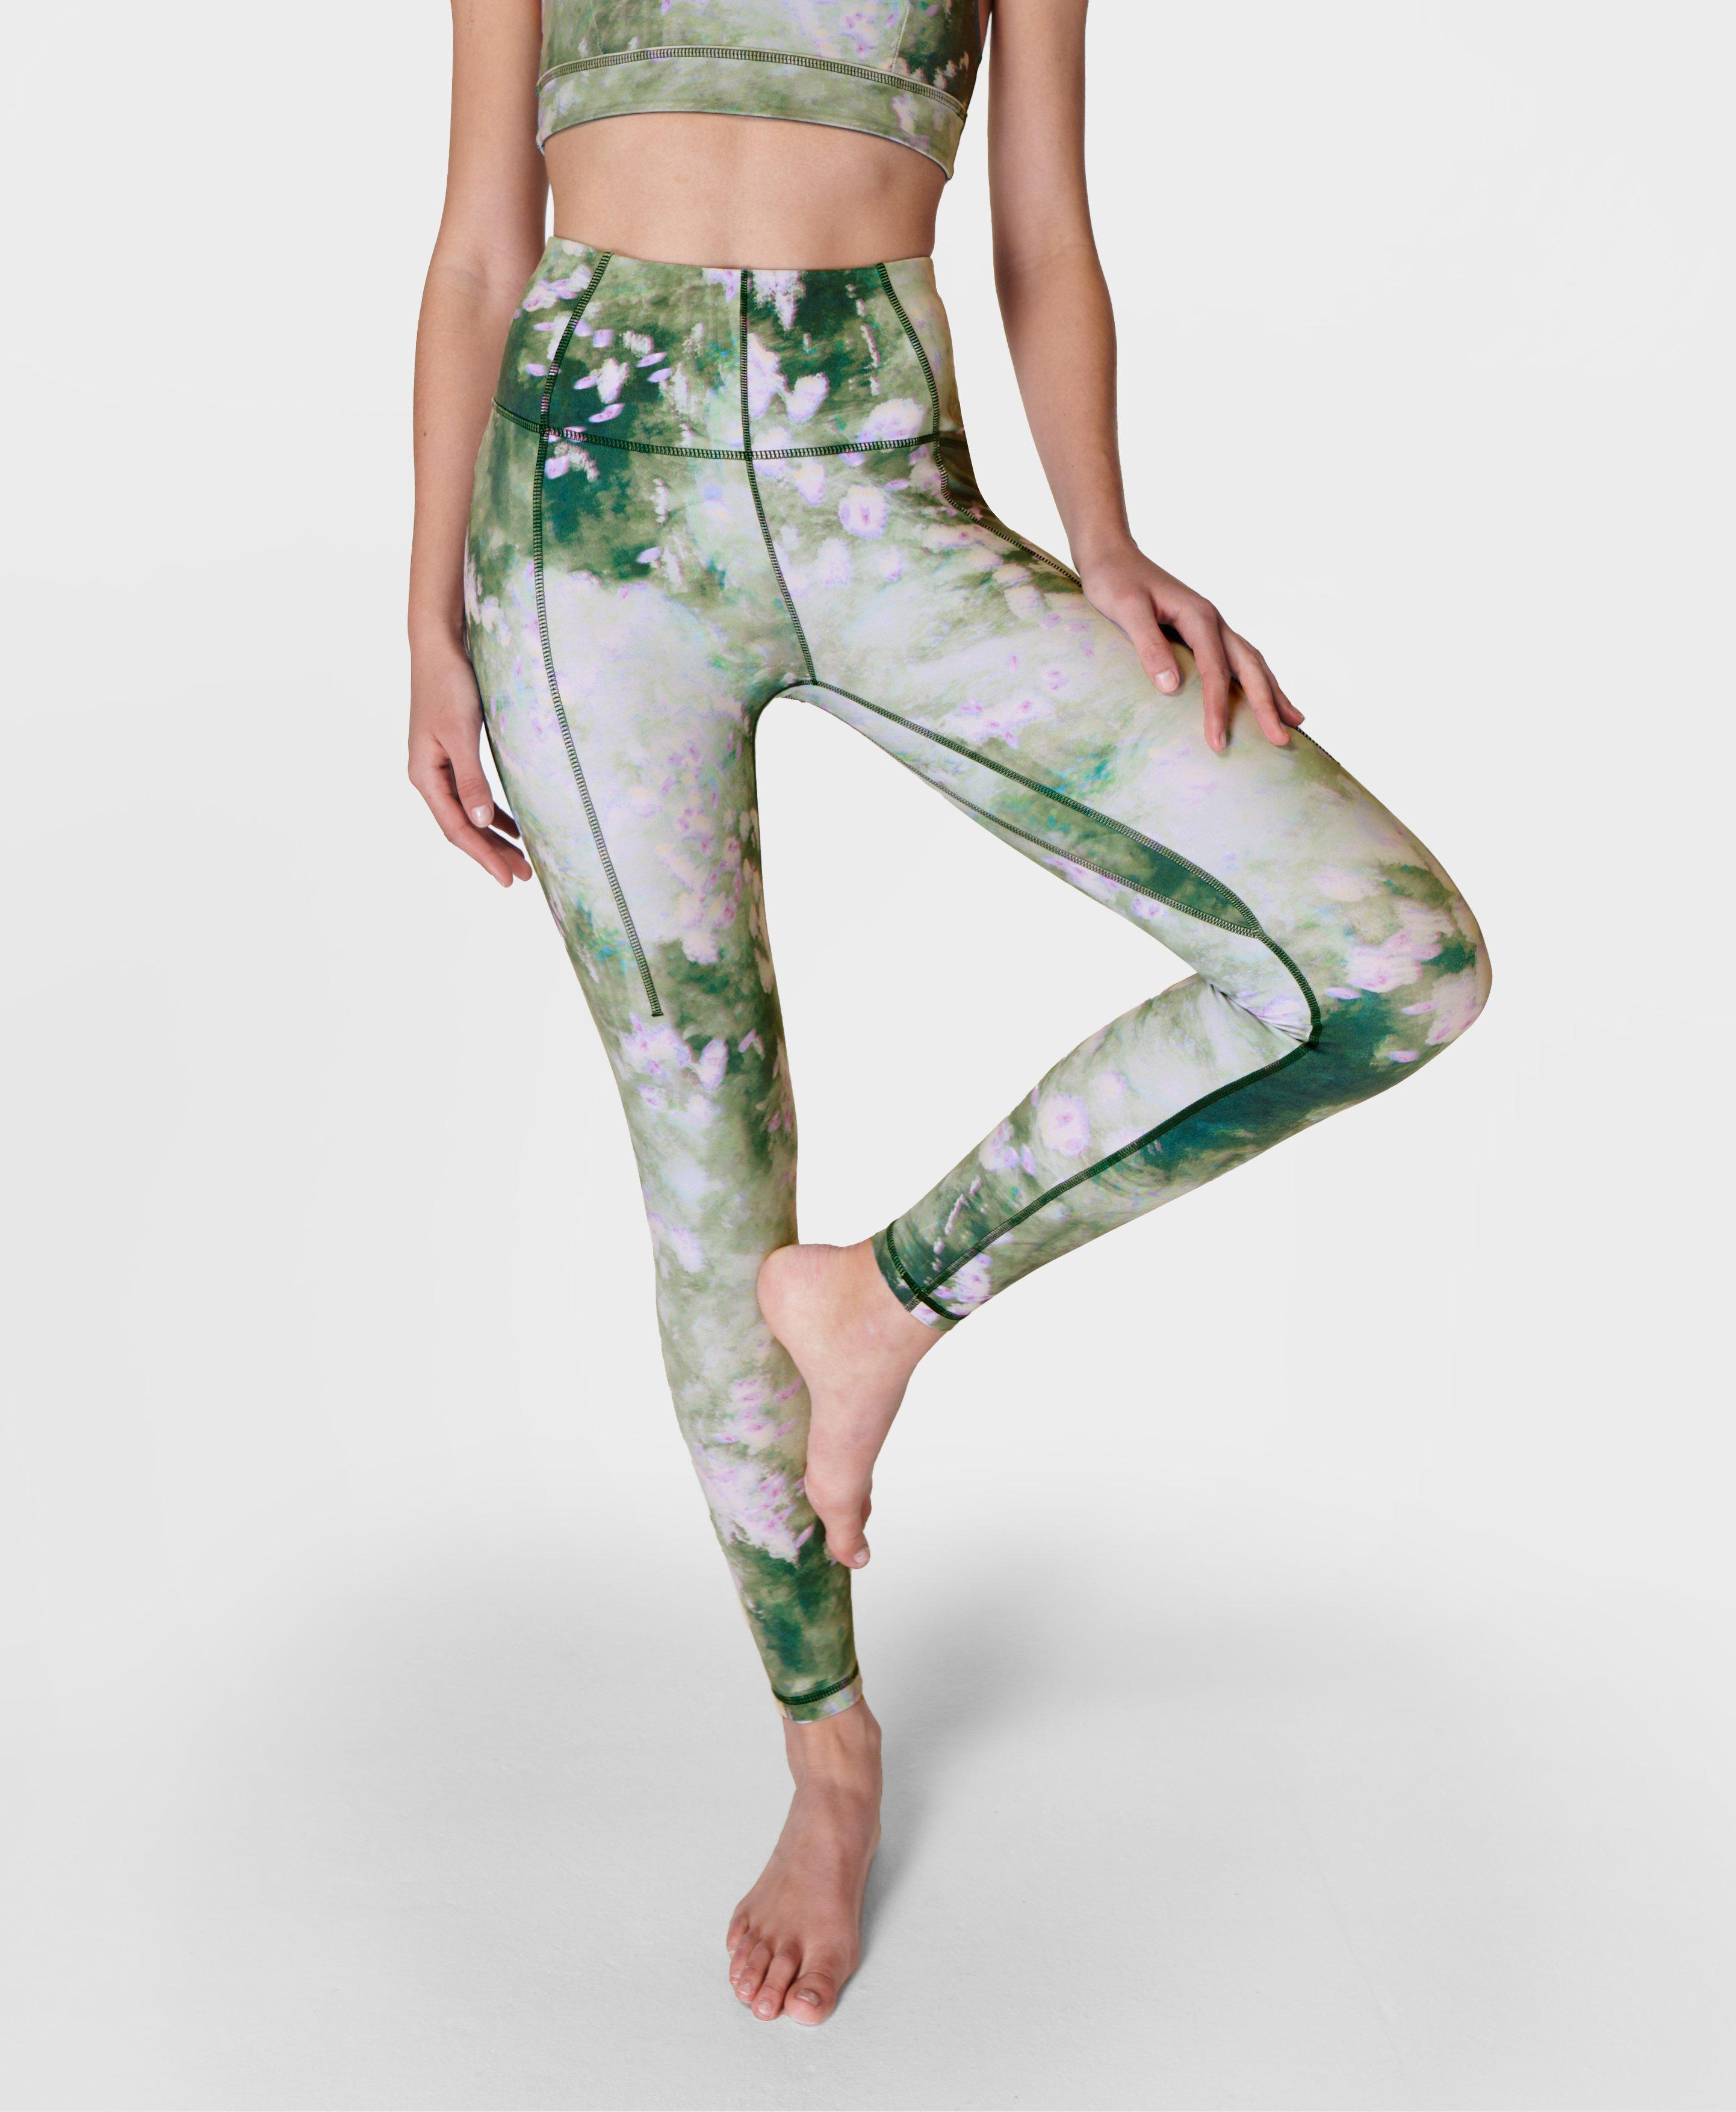 Super Soft Yoga Leggings - Green Lavender Meadow Print, Women's Leggings